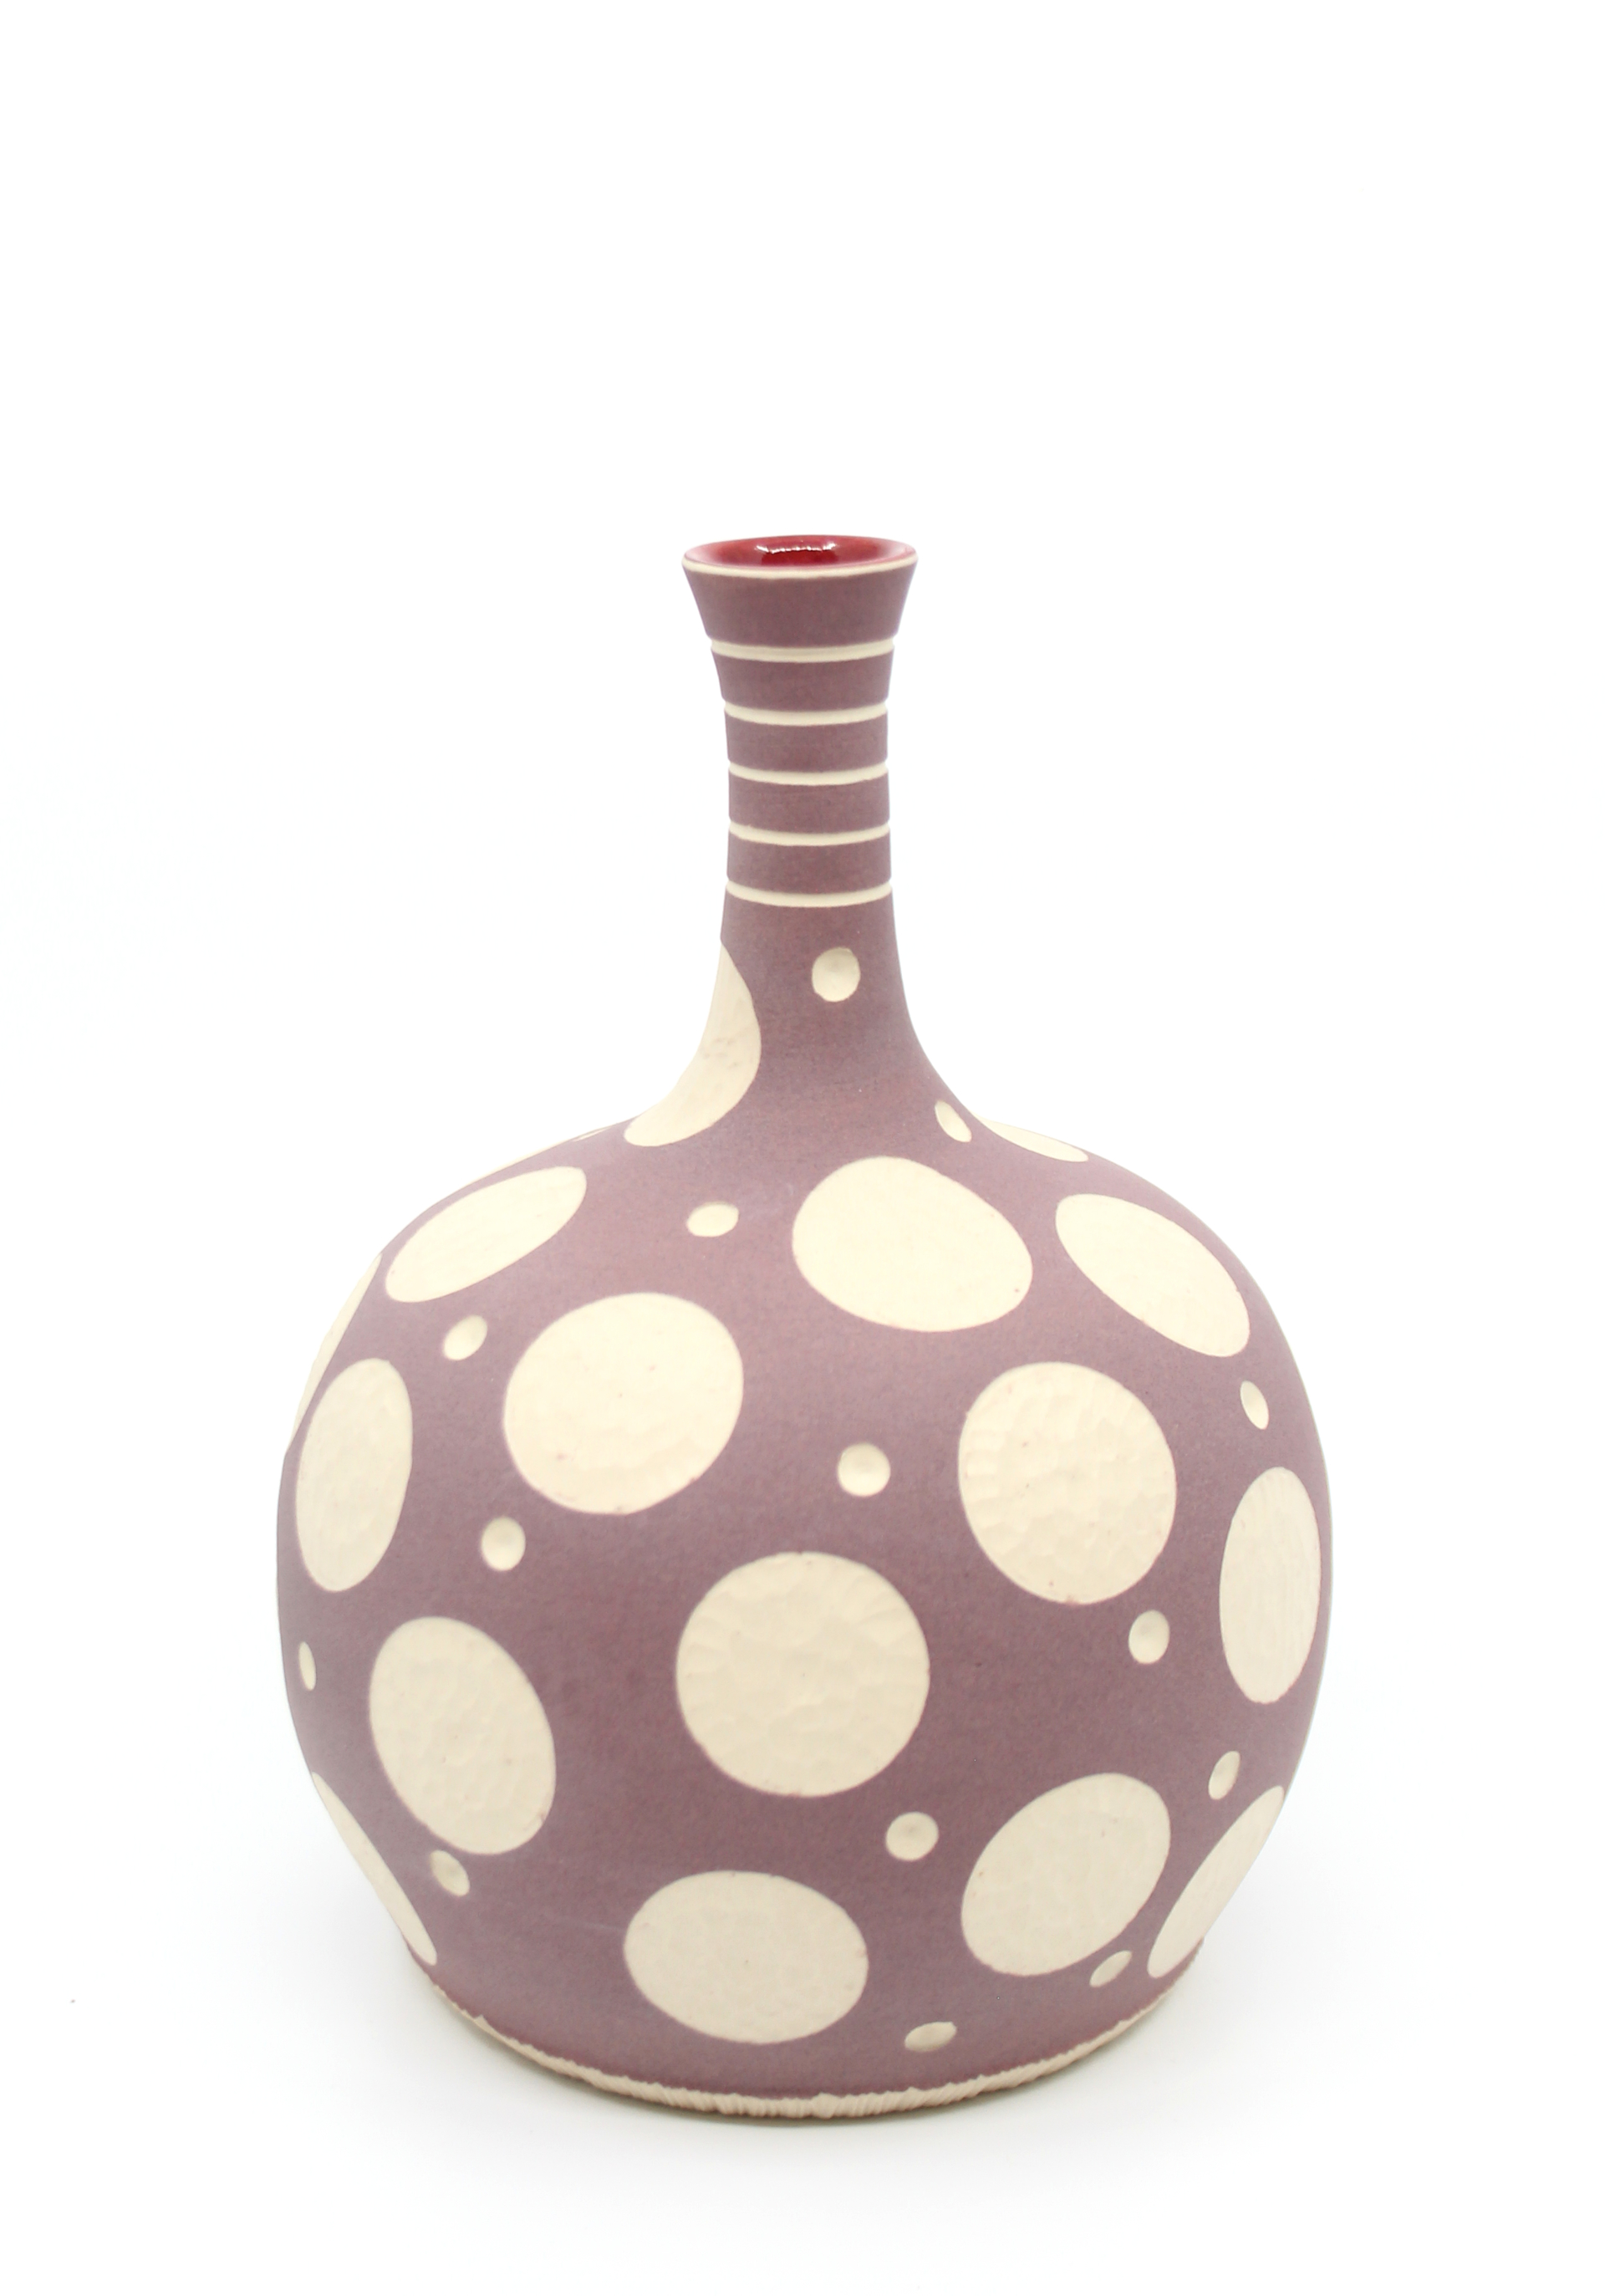 Polka Dot Vase by Chris Casey